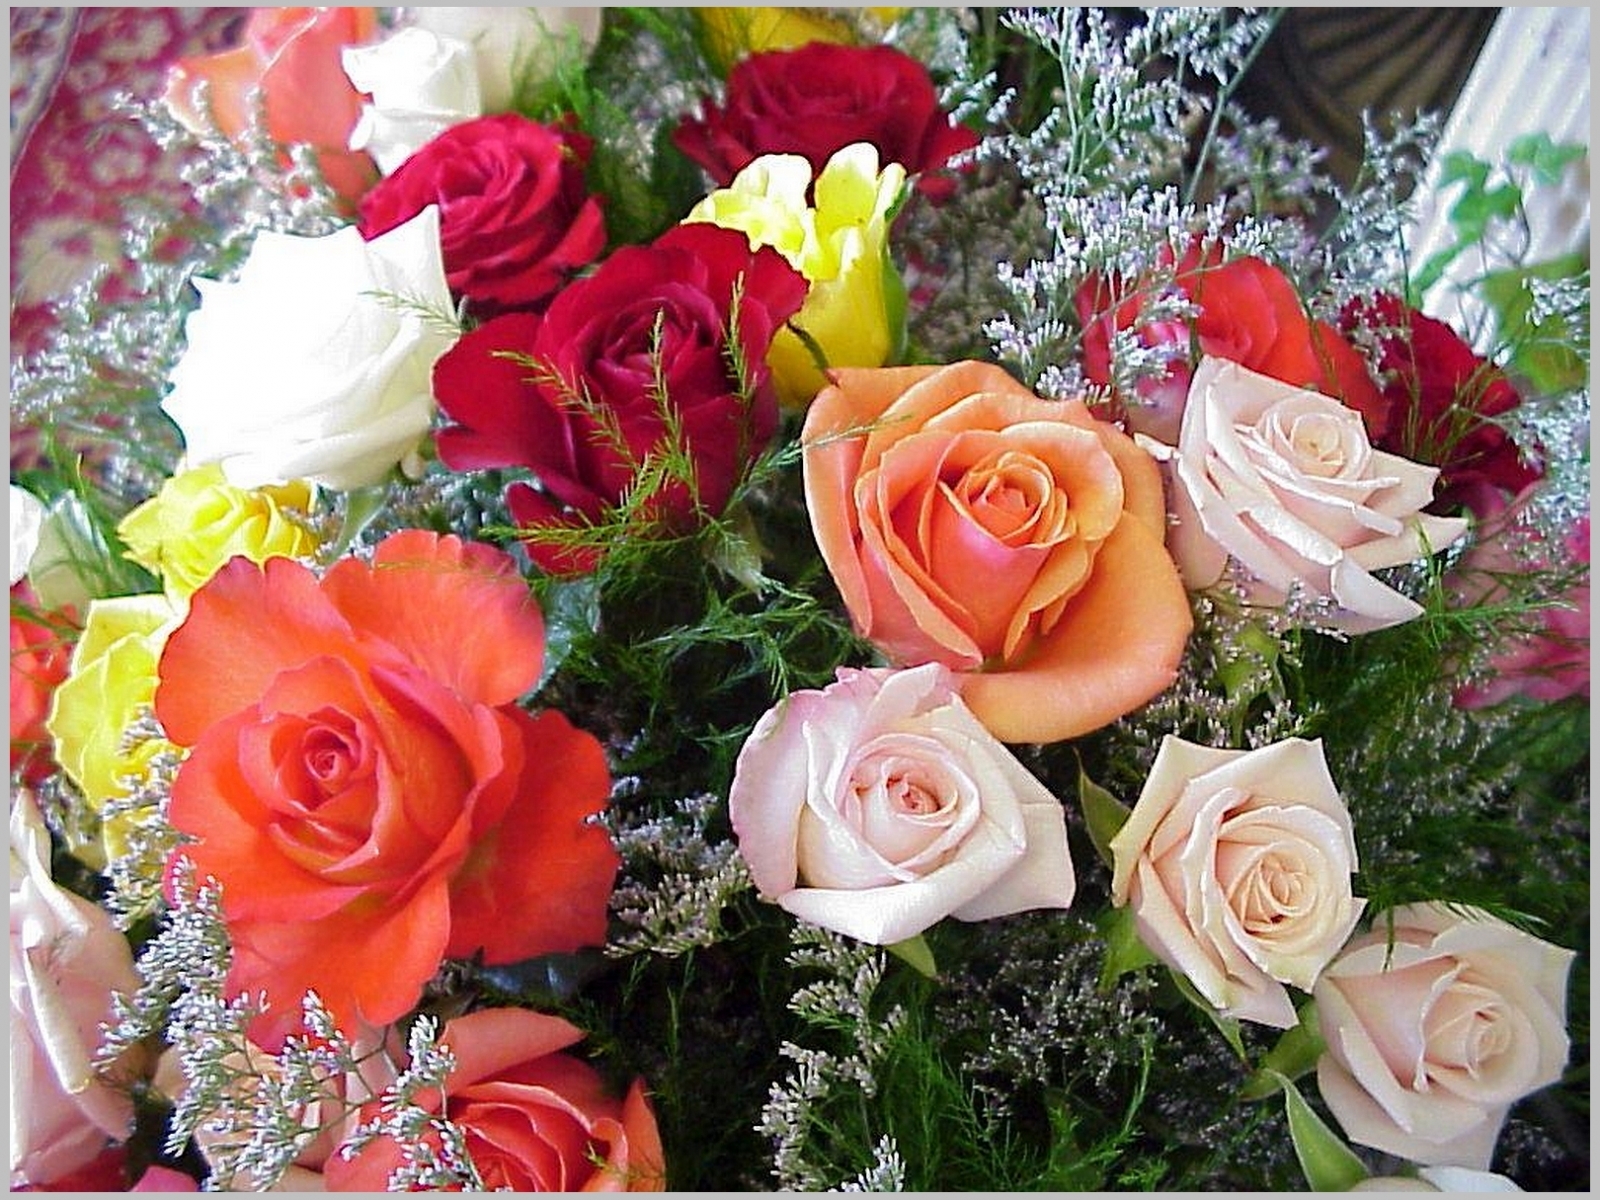 Lock Screen PC Wallpaper plants, holidays, flowers, roses, march 8 international women's day (iwd)